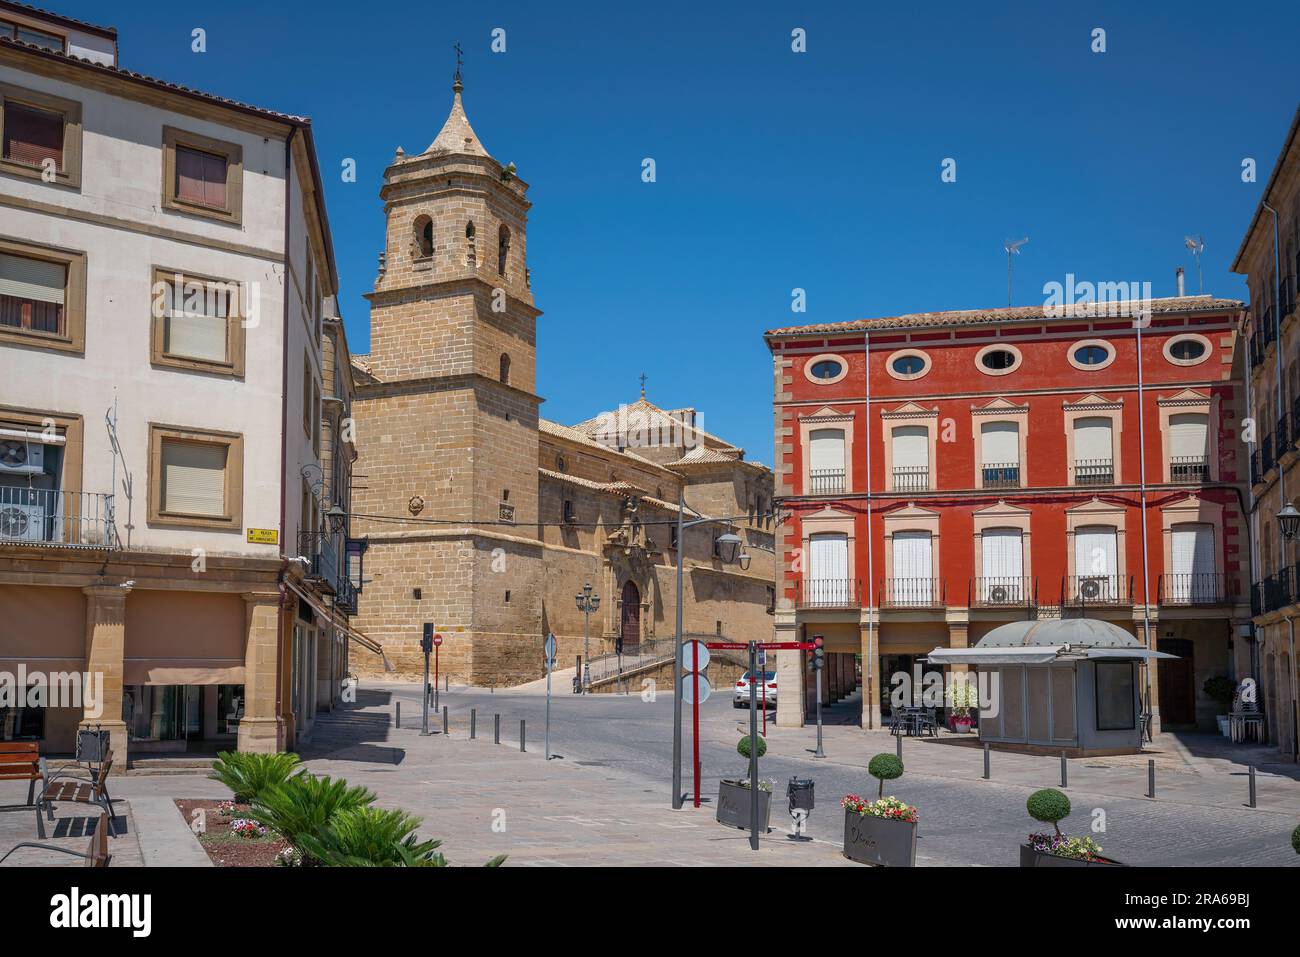 Trinity Church et Plaza Andalucia Square - Ubeda, Jaen, Espagne Banque D'Images